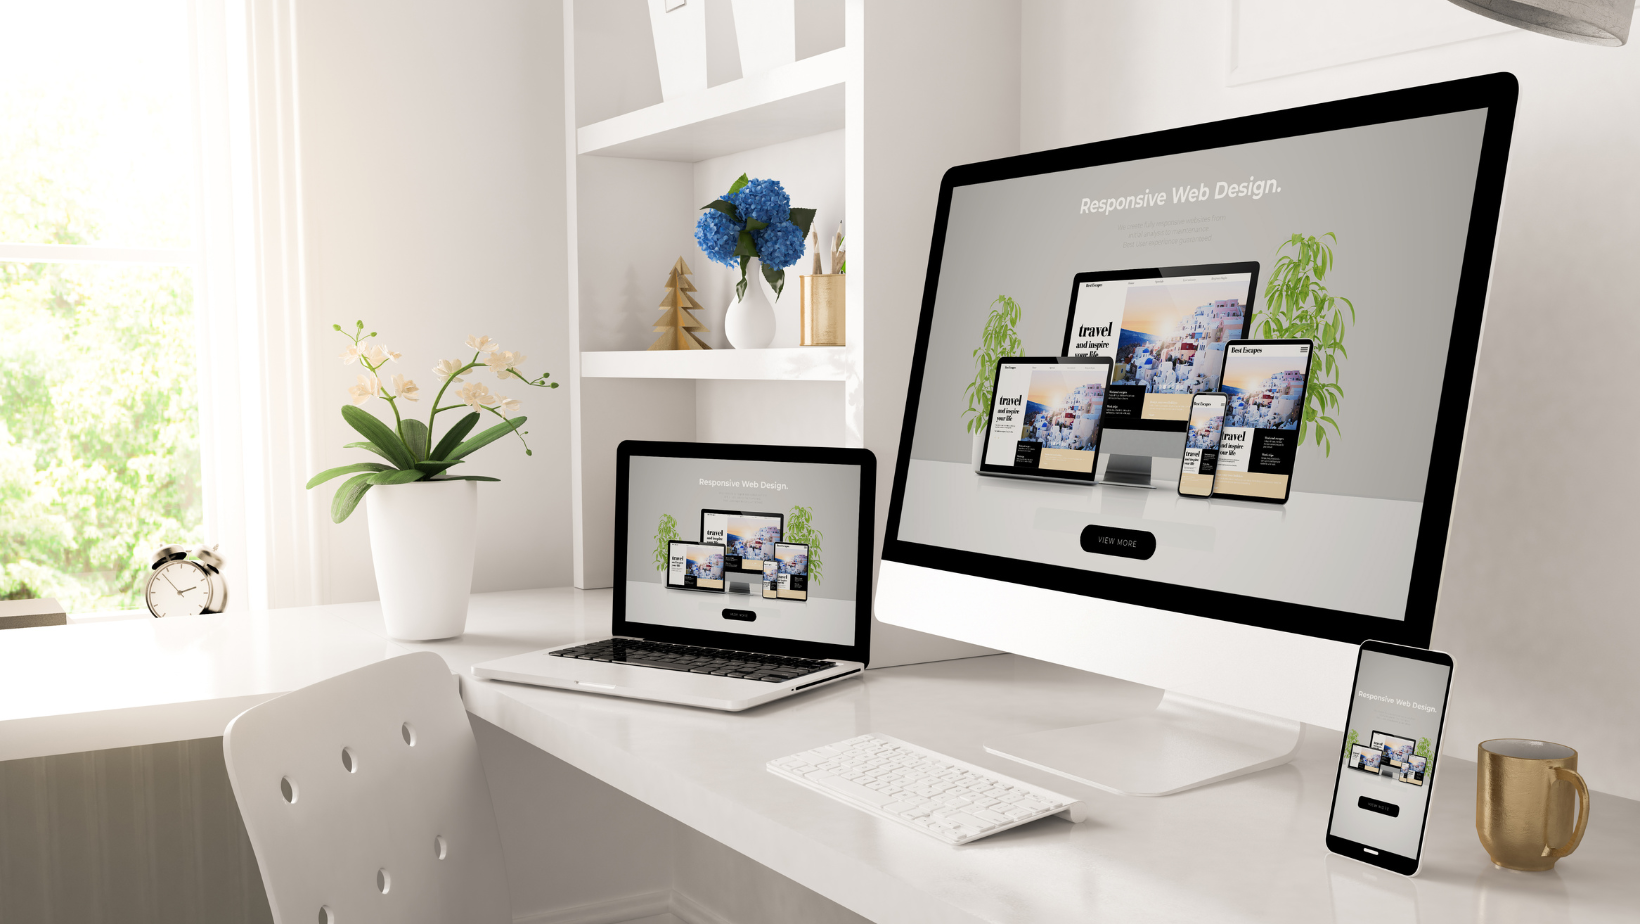 A desktop, laptop, smartphone, and a keyboard displaying responsive website design.